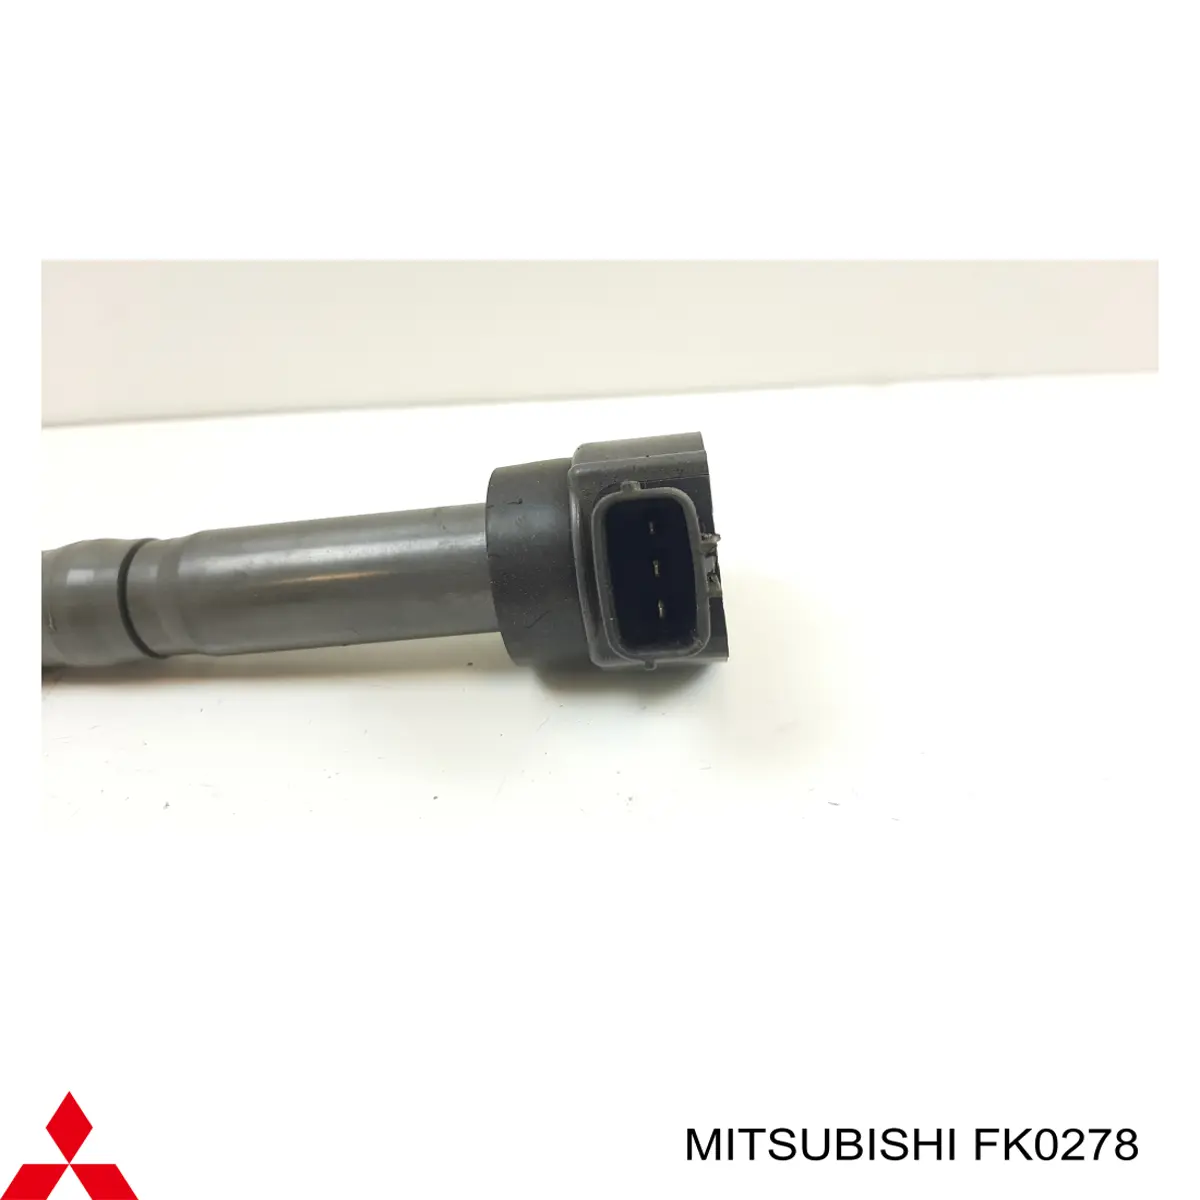 FK0278 Mitsubishi bobina